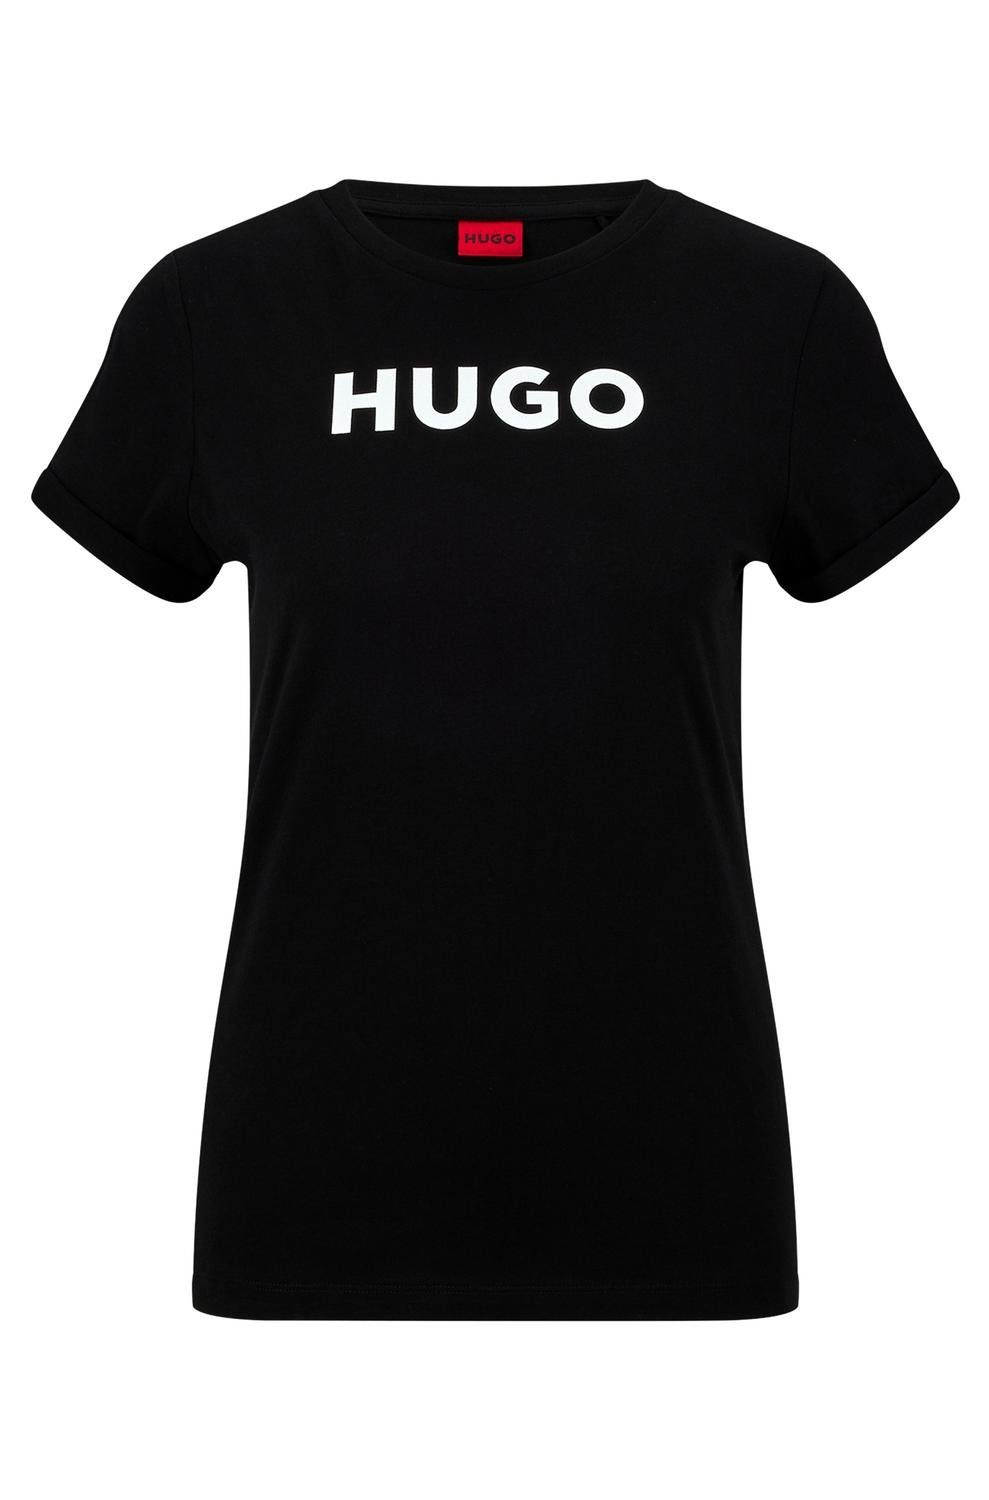 TOM TAILOR Denim T-Shirt The HUGO Tee 10243064 01, Black